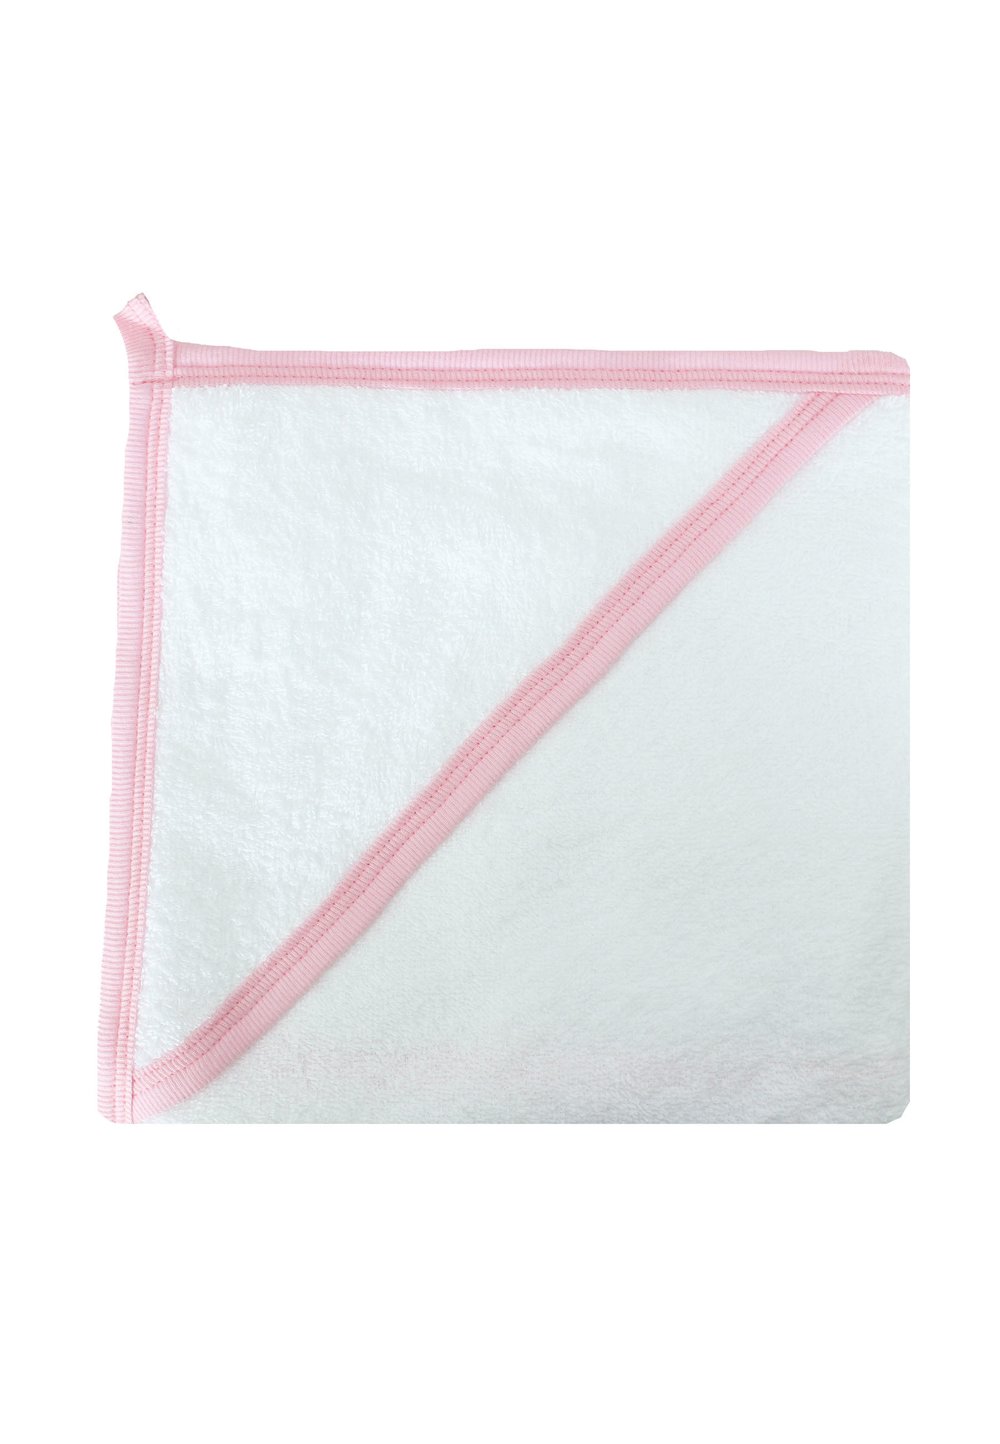 Prosop bumbac, alb cu margine roz, 80 x 100 cm Prichindel